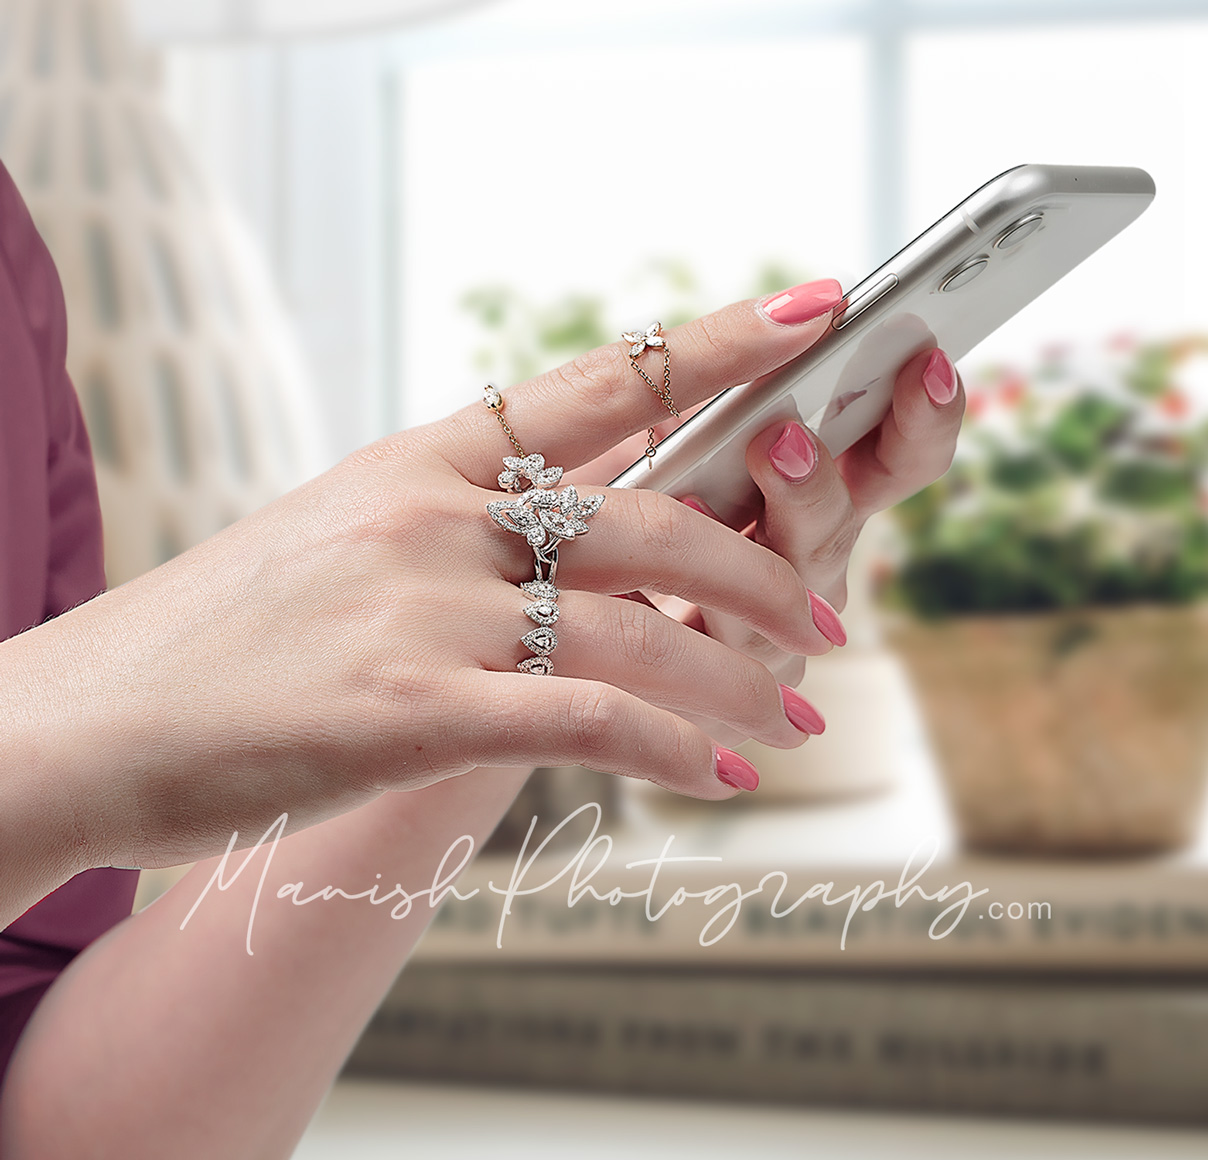 Jewellery studded hand holding a phone